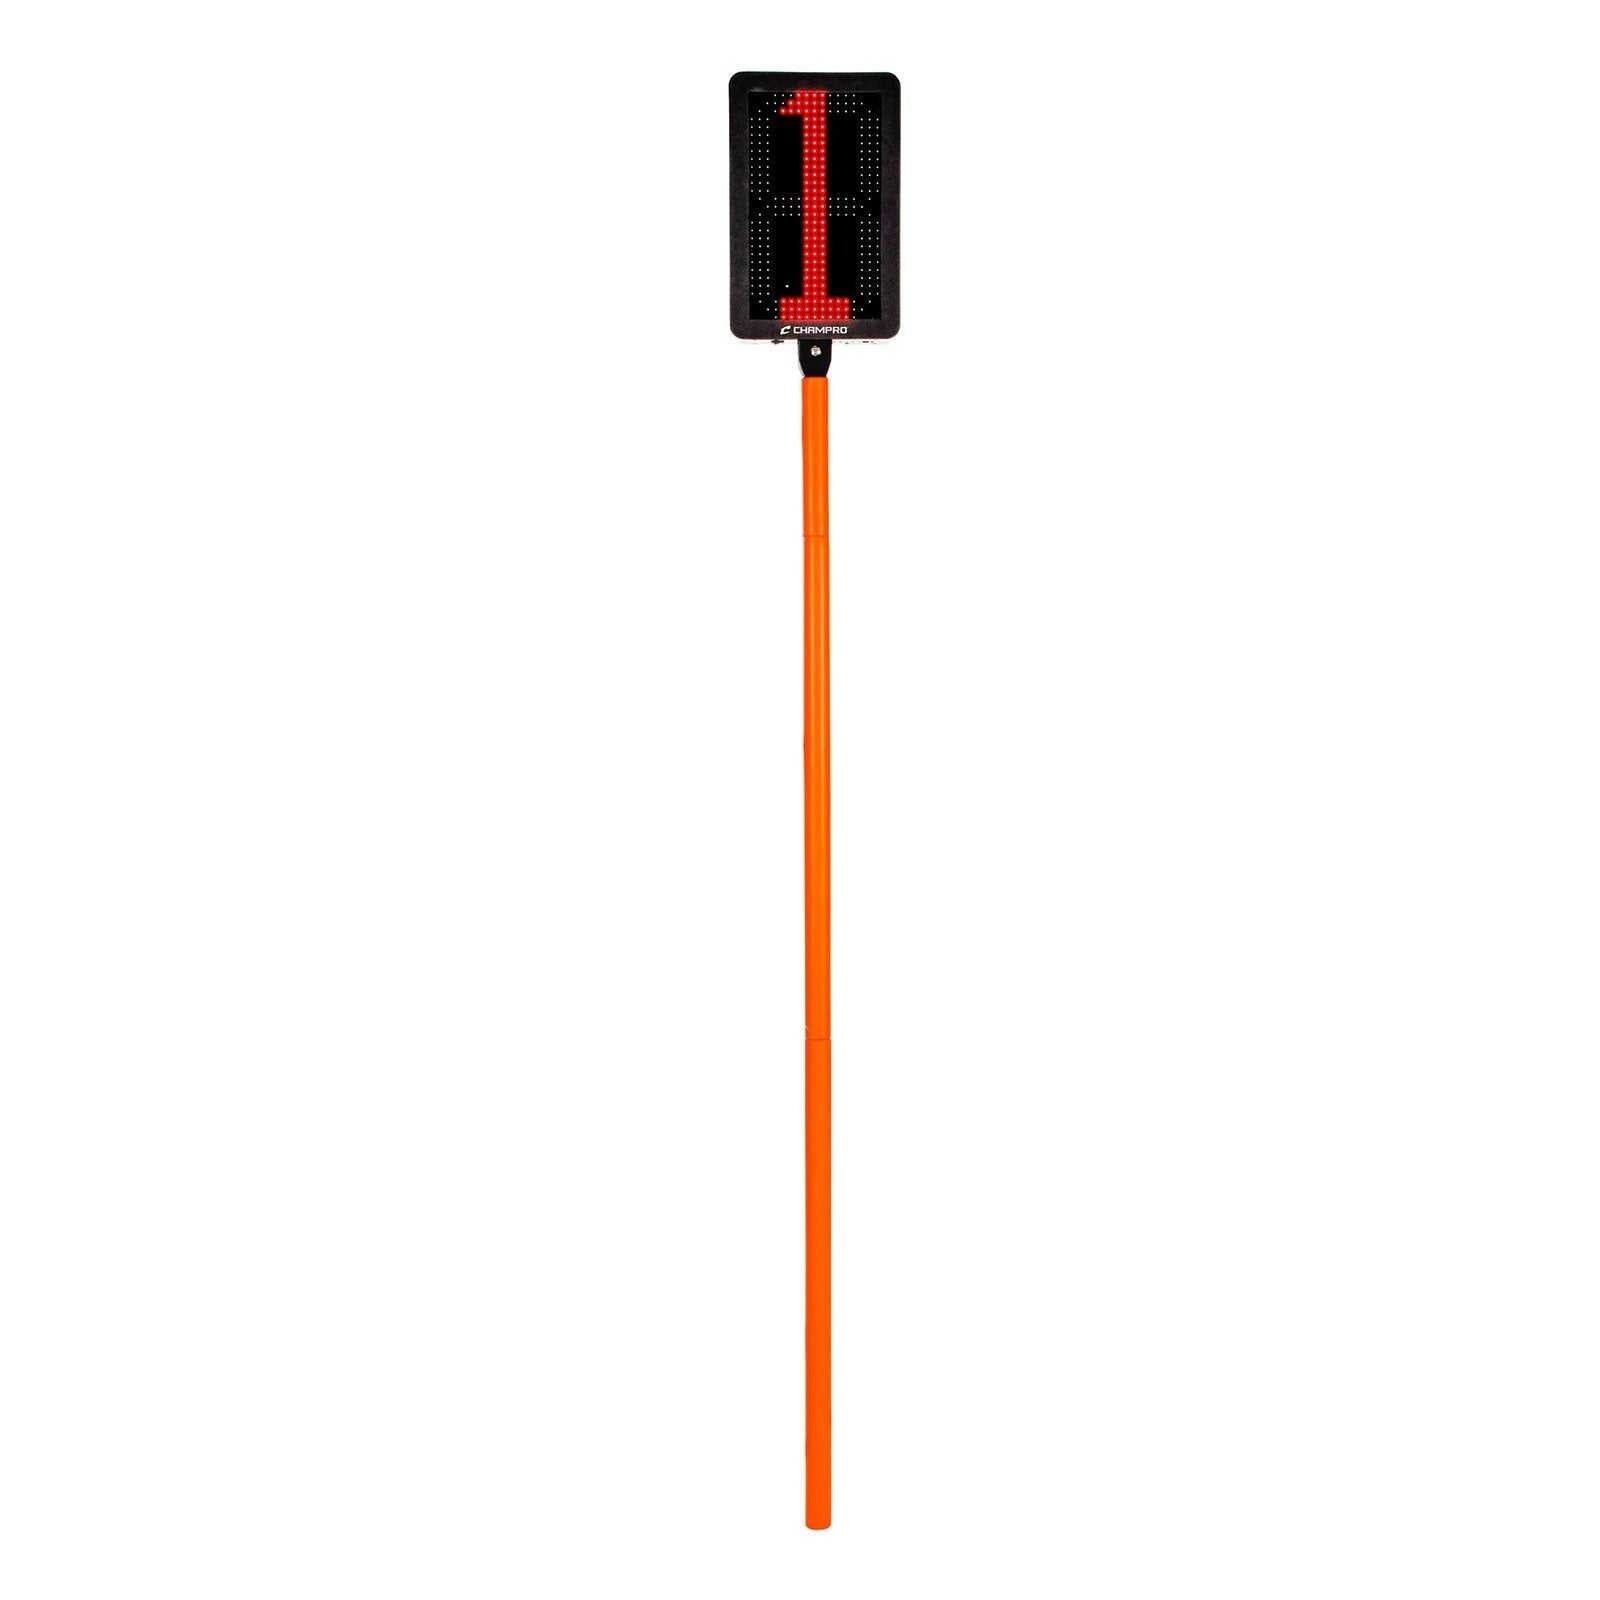 Champro A103D Digital Down Marker - Black Orange - HIT a Double